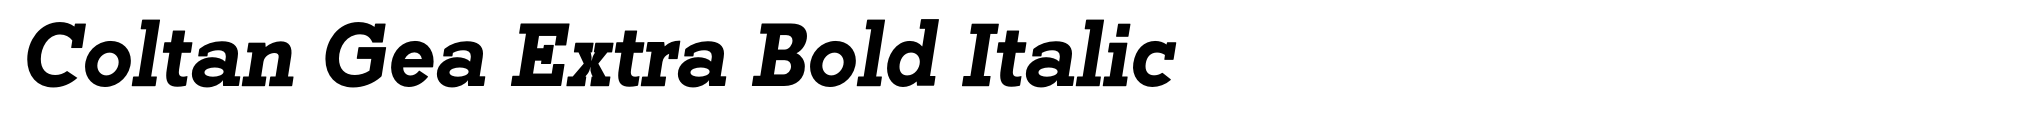 Coltan Gea Extra Bold Italic image